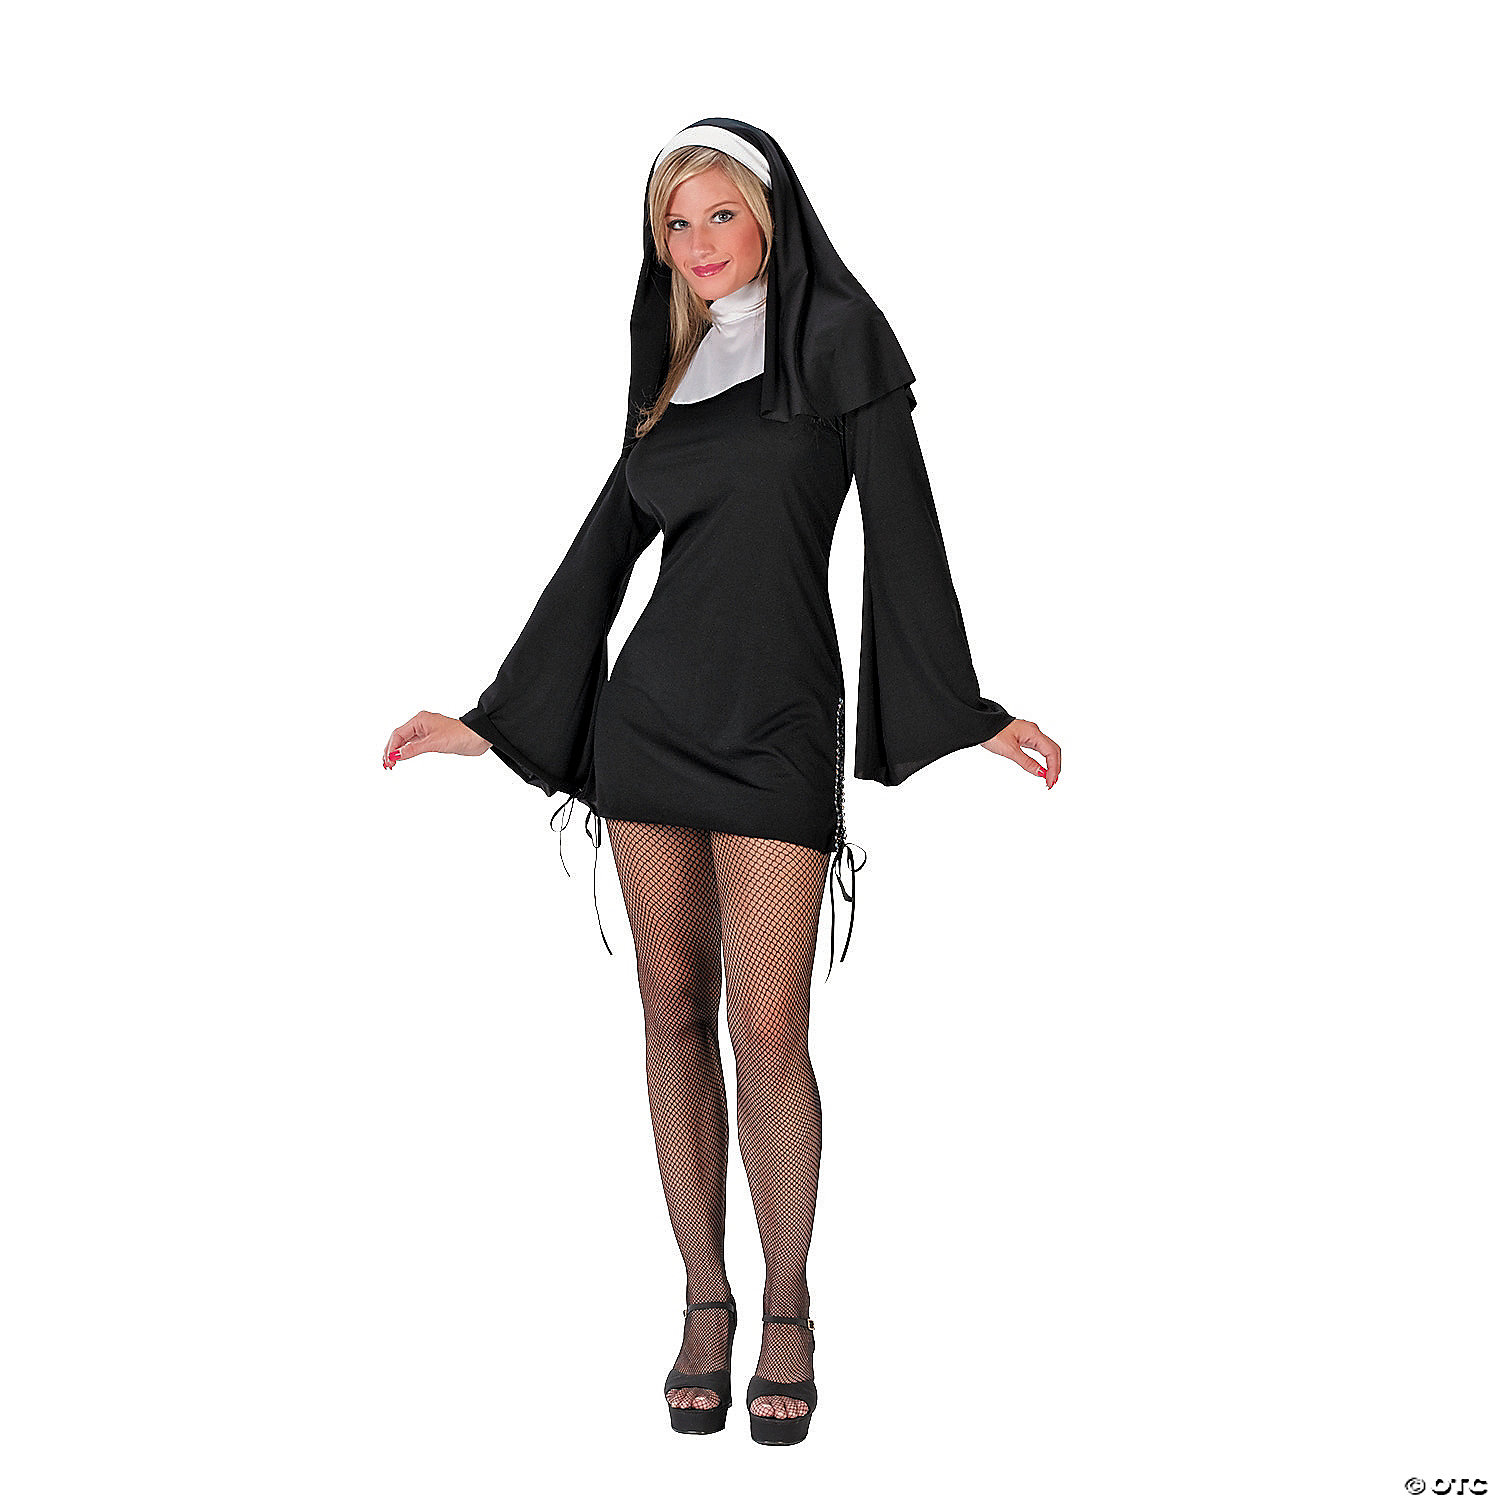 nun dress up costume